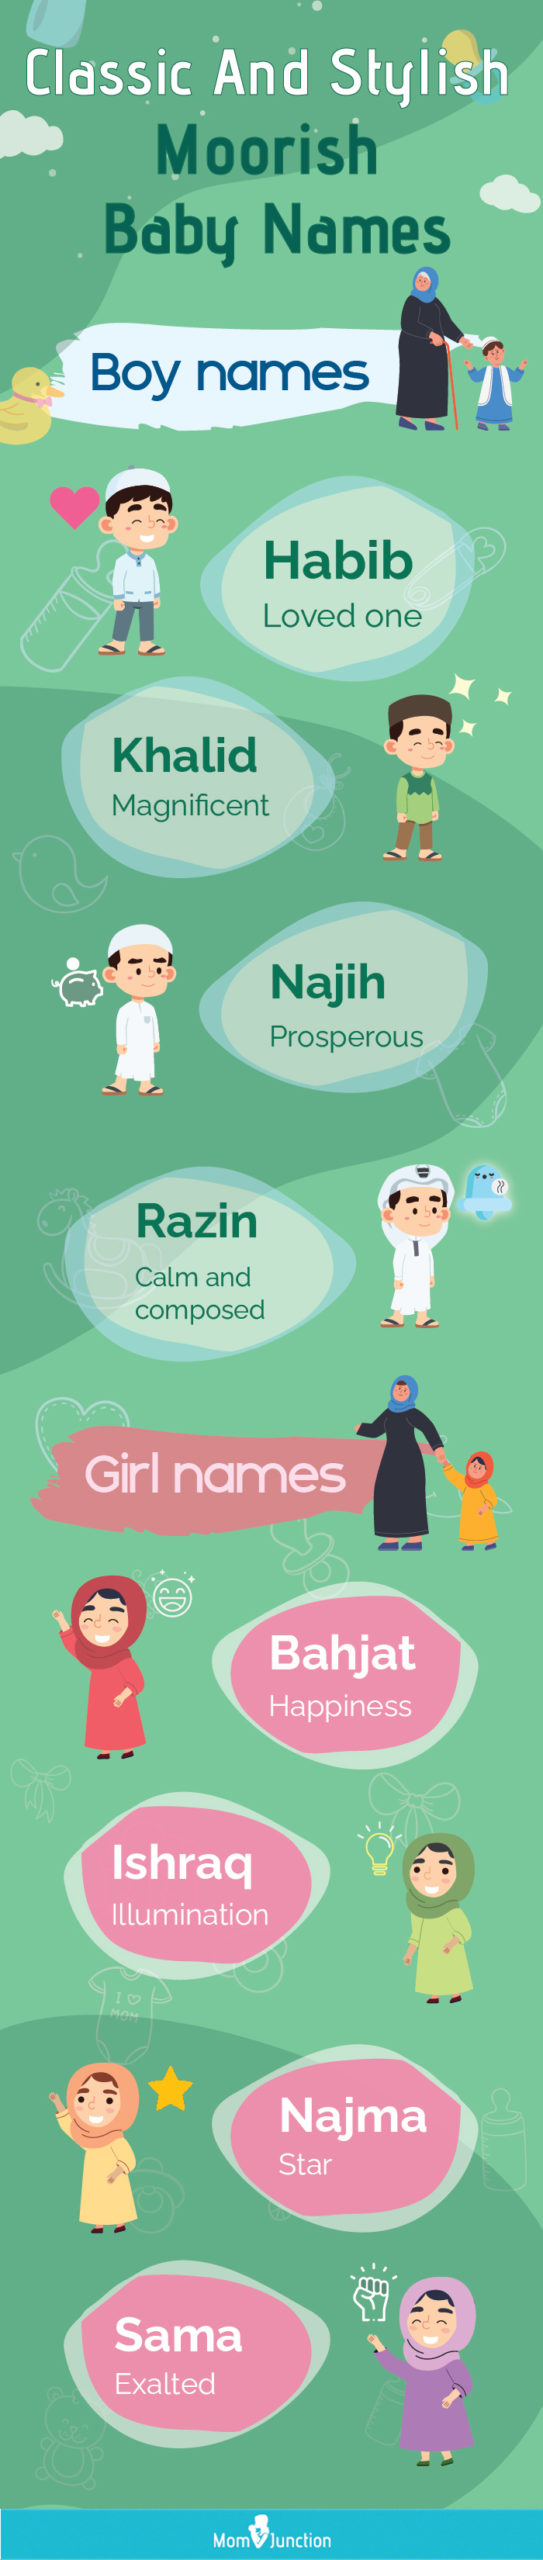 stylish moorish baby names (infographic)